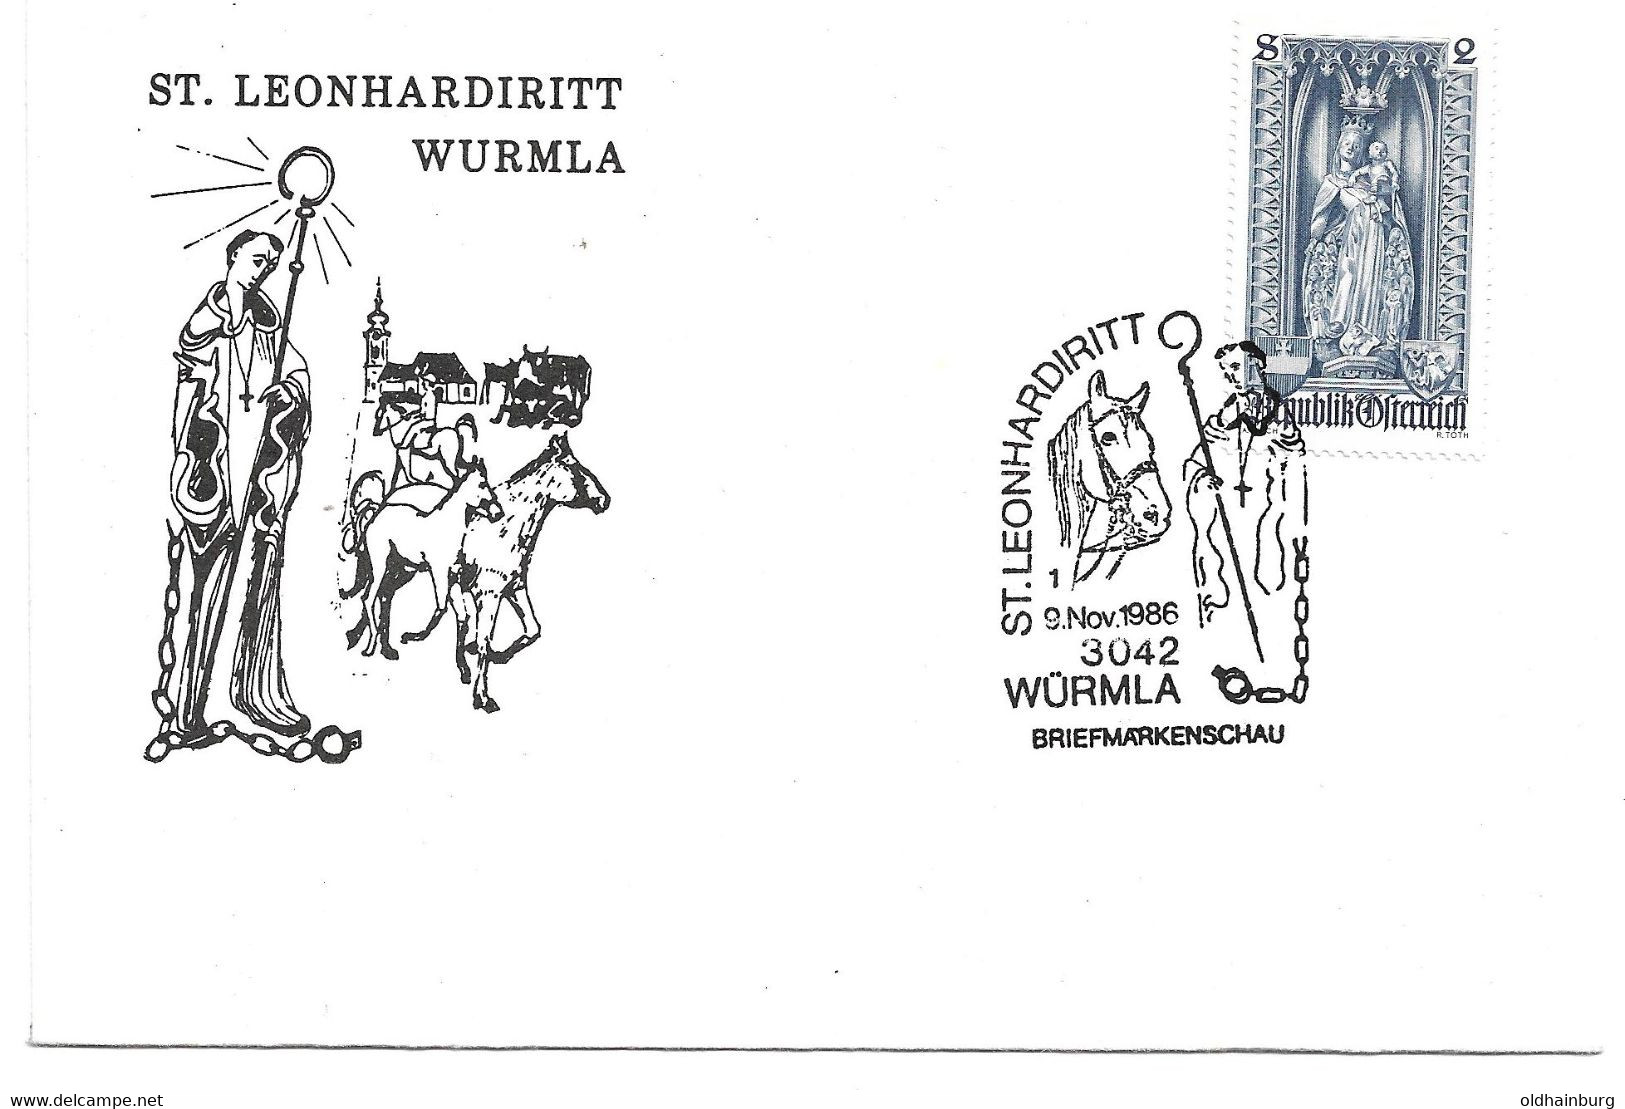 3248m: Beleg 9.11.1986, St. Leonhardiritt 3042 Würmla, Briefmarkenschau, Pferd - Tulln